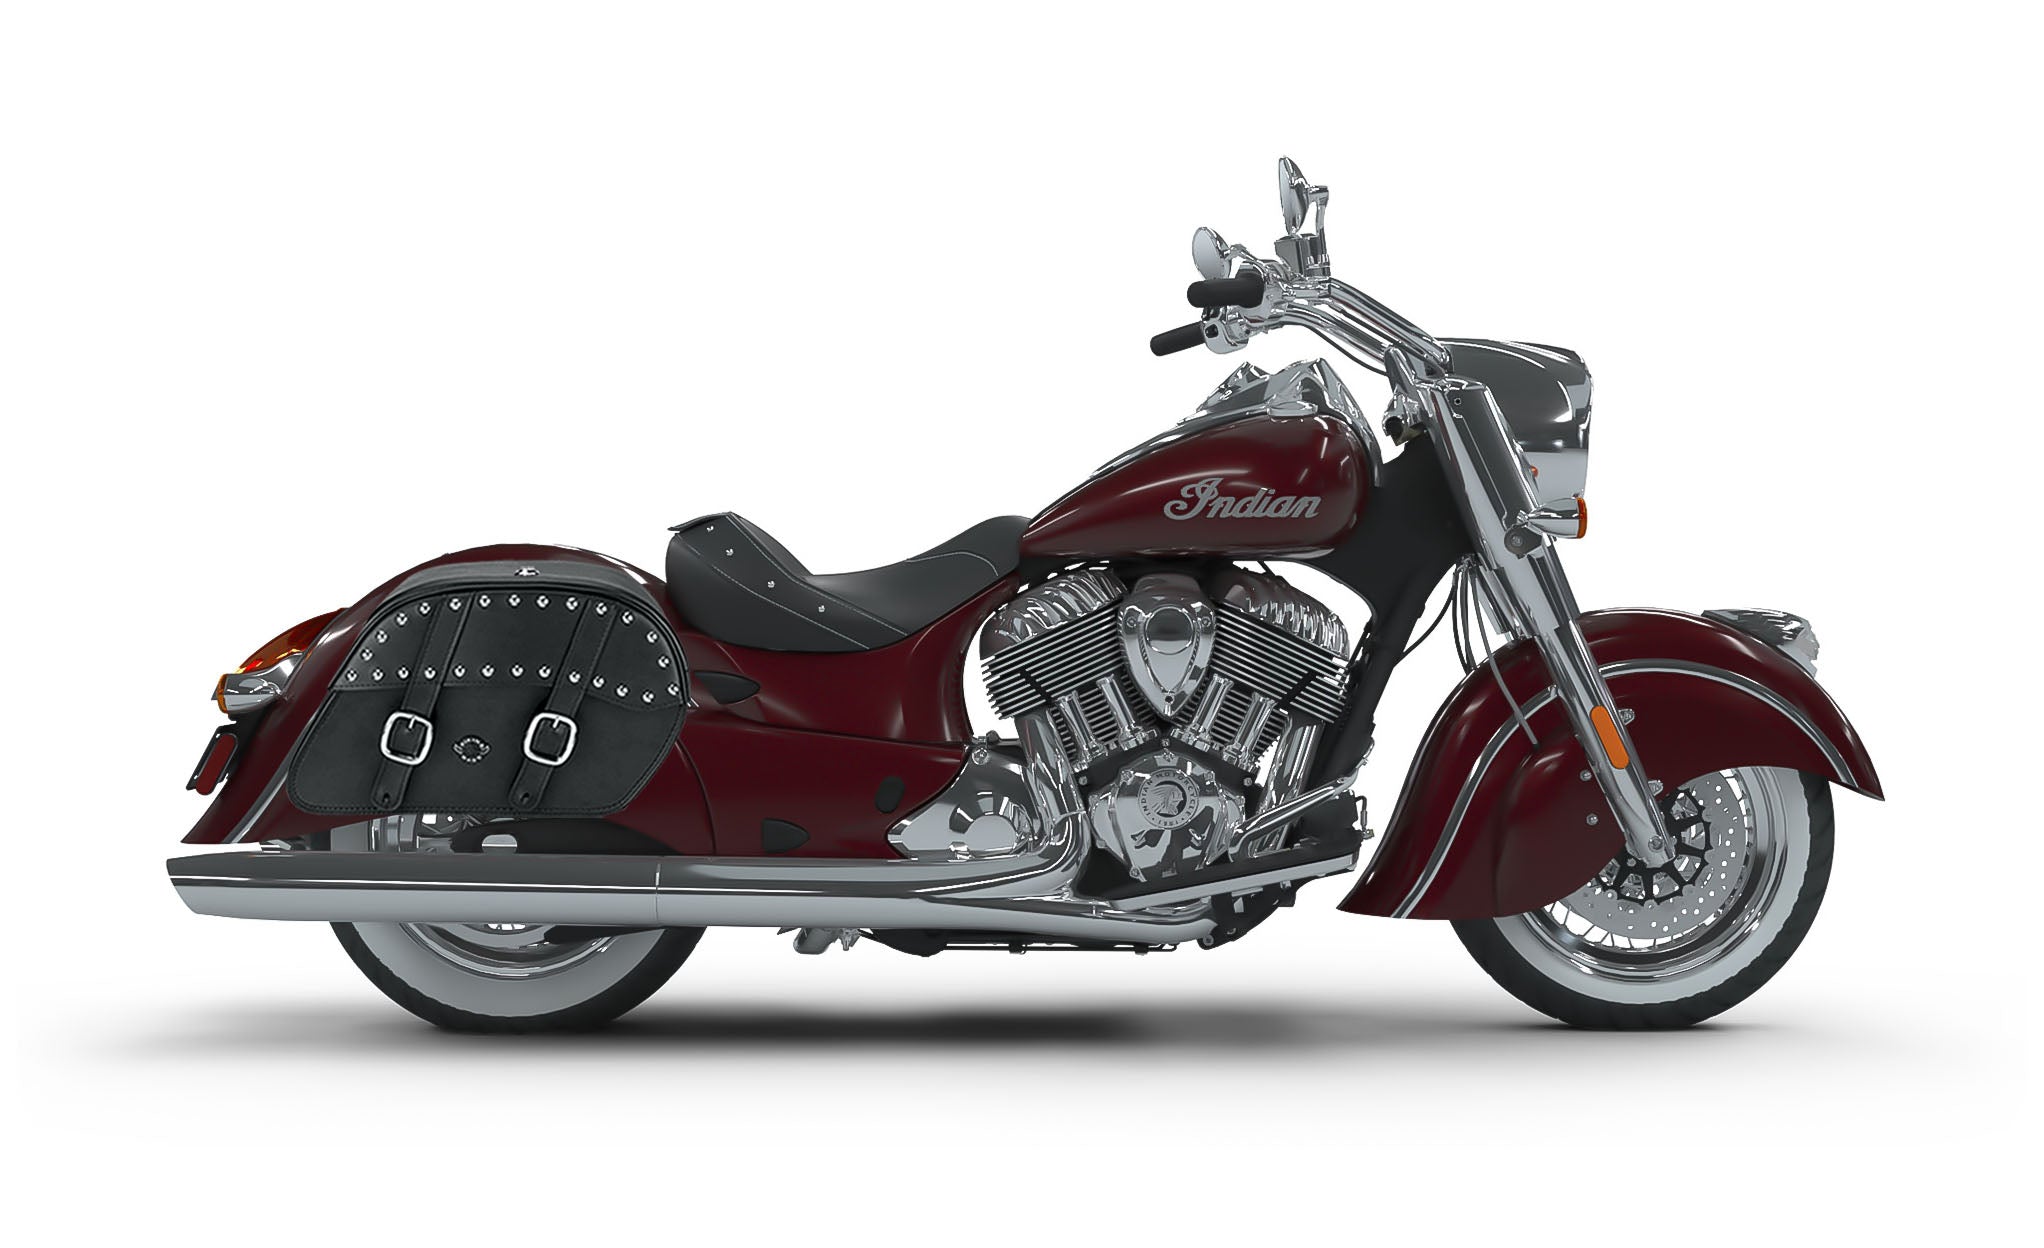 Viking Skarner Large Indian Chief Classic Leather Studded Motorcycle Saddlebags on Bike Photo @expand